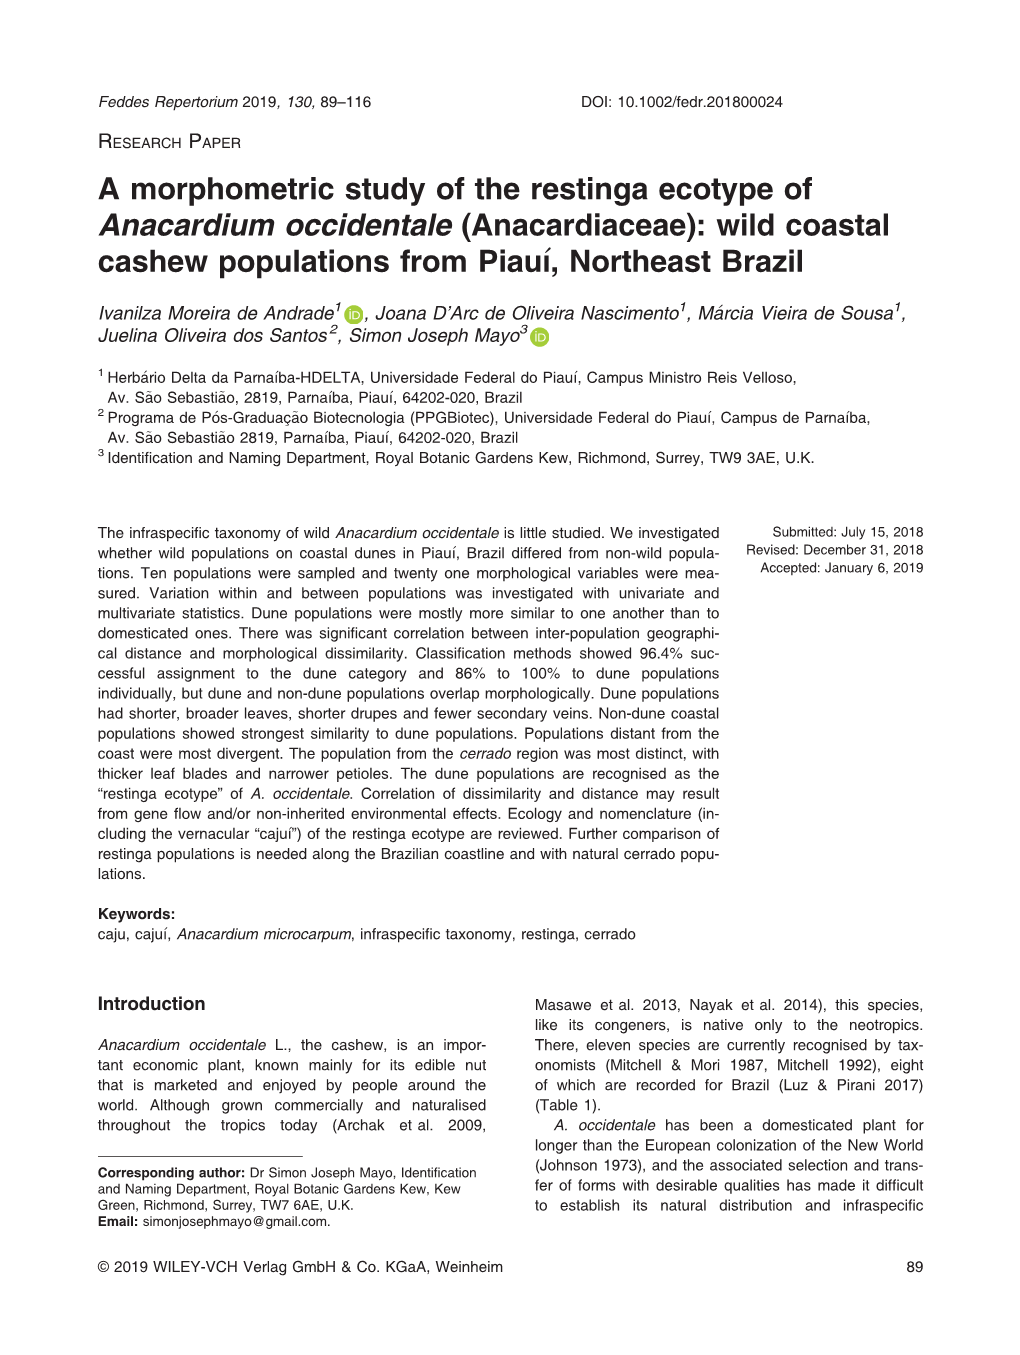 A Morphometric Study of the Restinga Ecotype of Anacardium Occidentale (Anacardiaceae): Wild Coastal Cashew Populations from Piau�I, Northeast Brazil